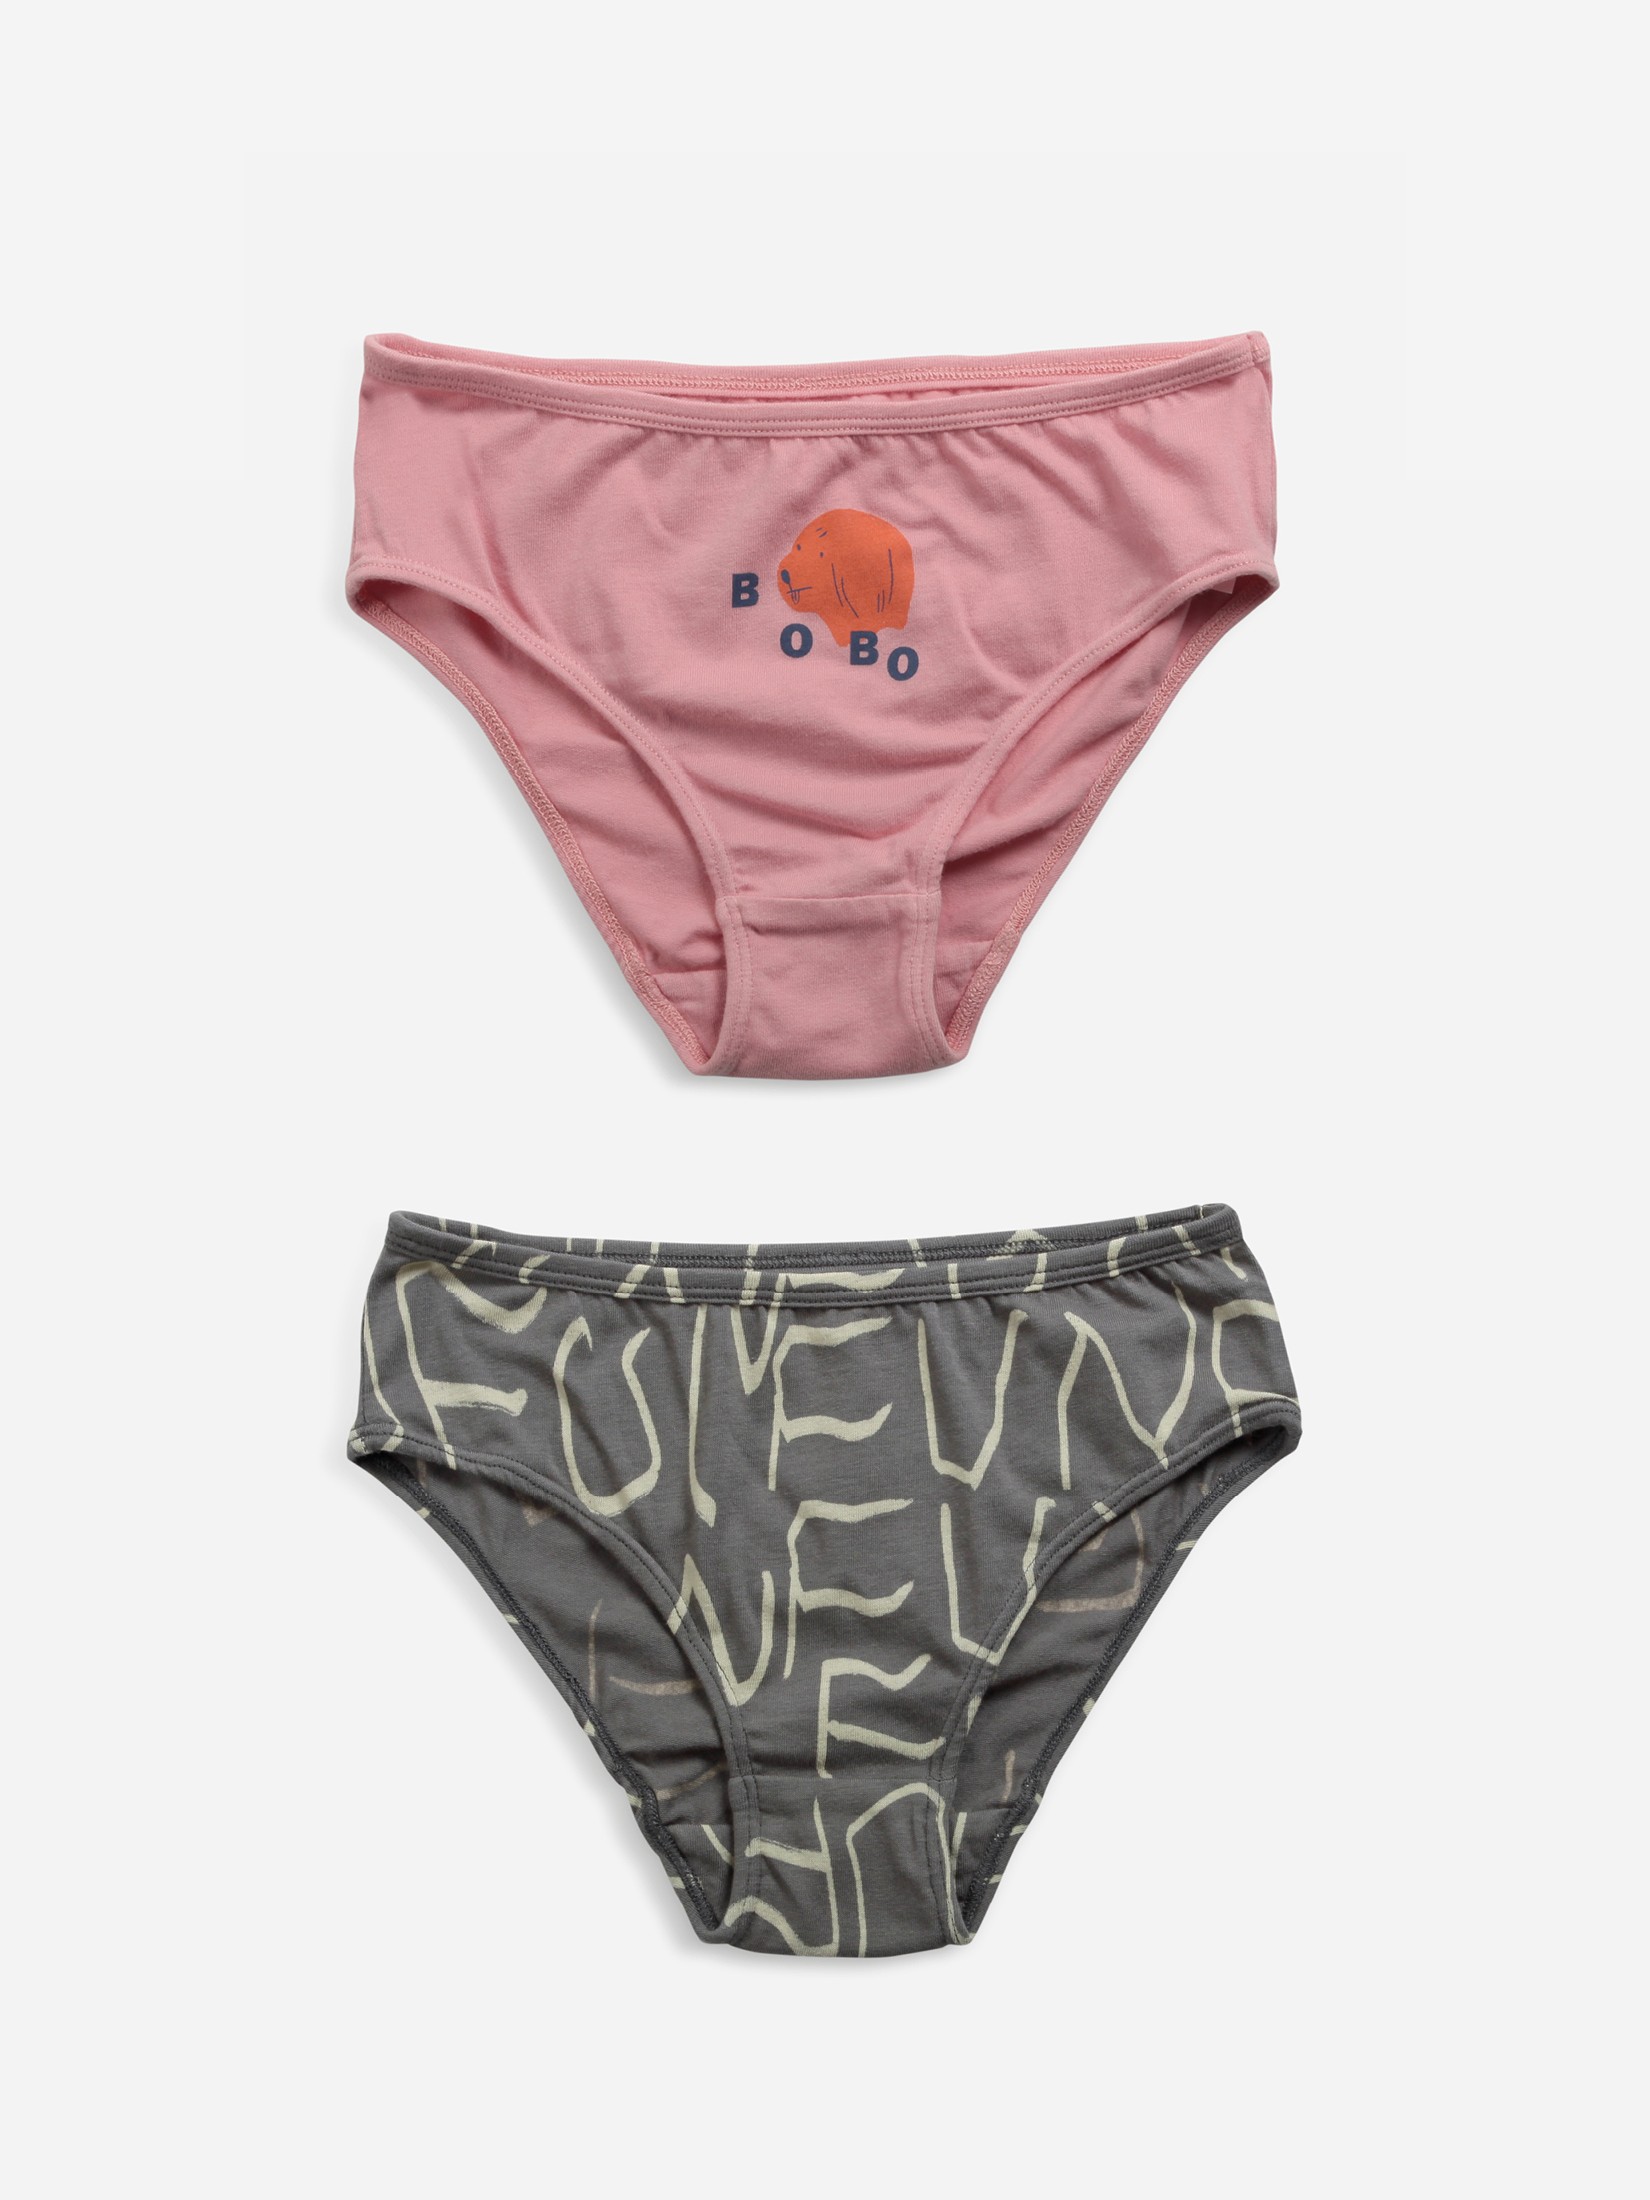 Buy BOBO Kids Little Girls Panties Toddler Underwear Christmas